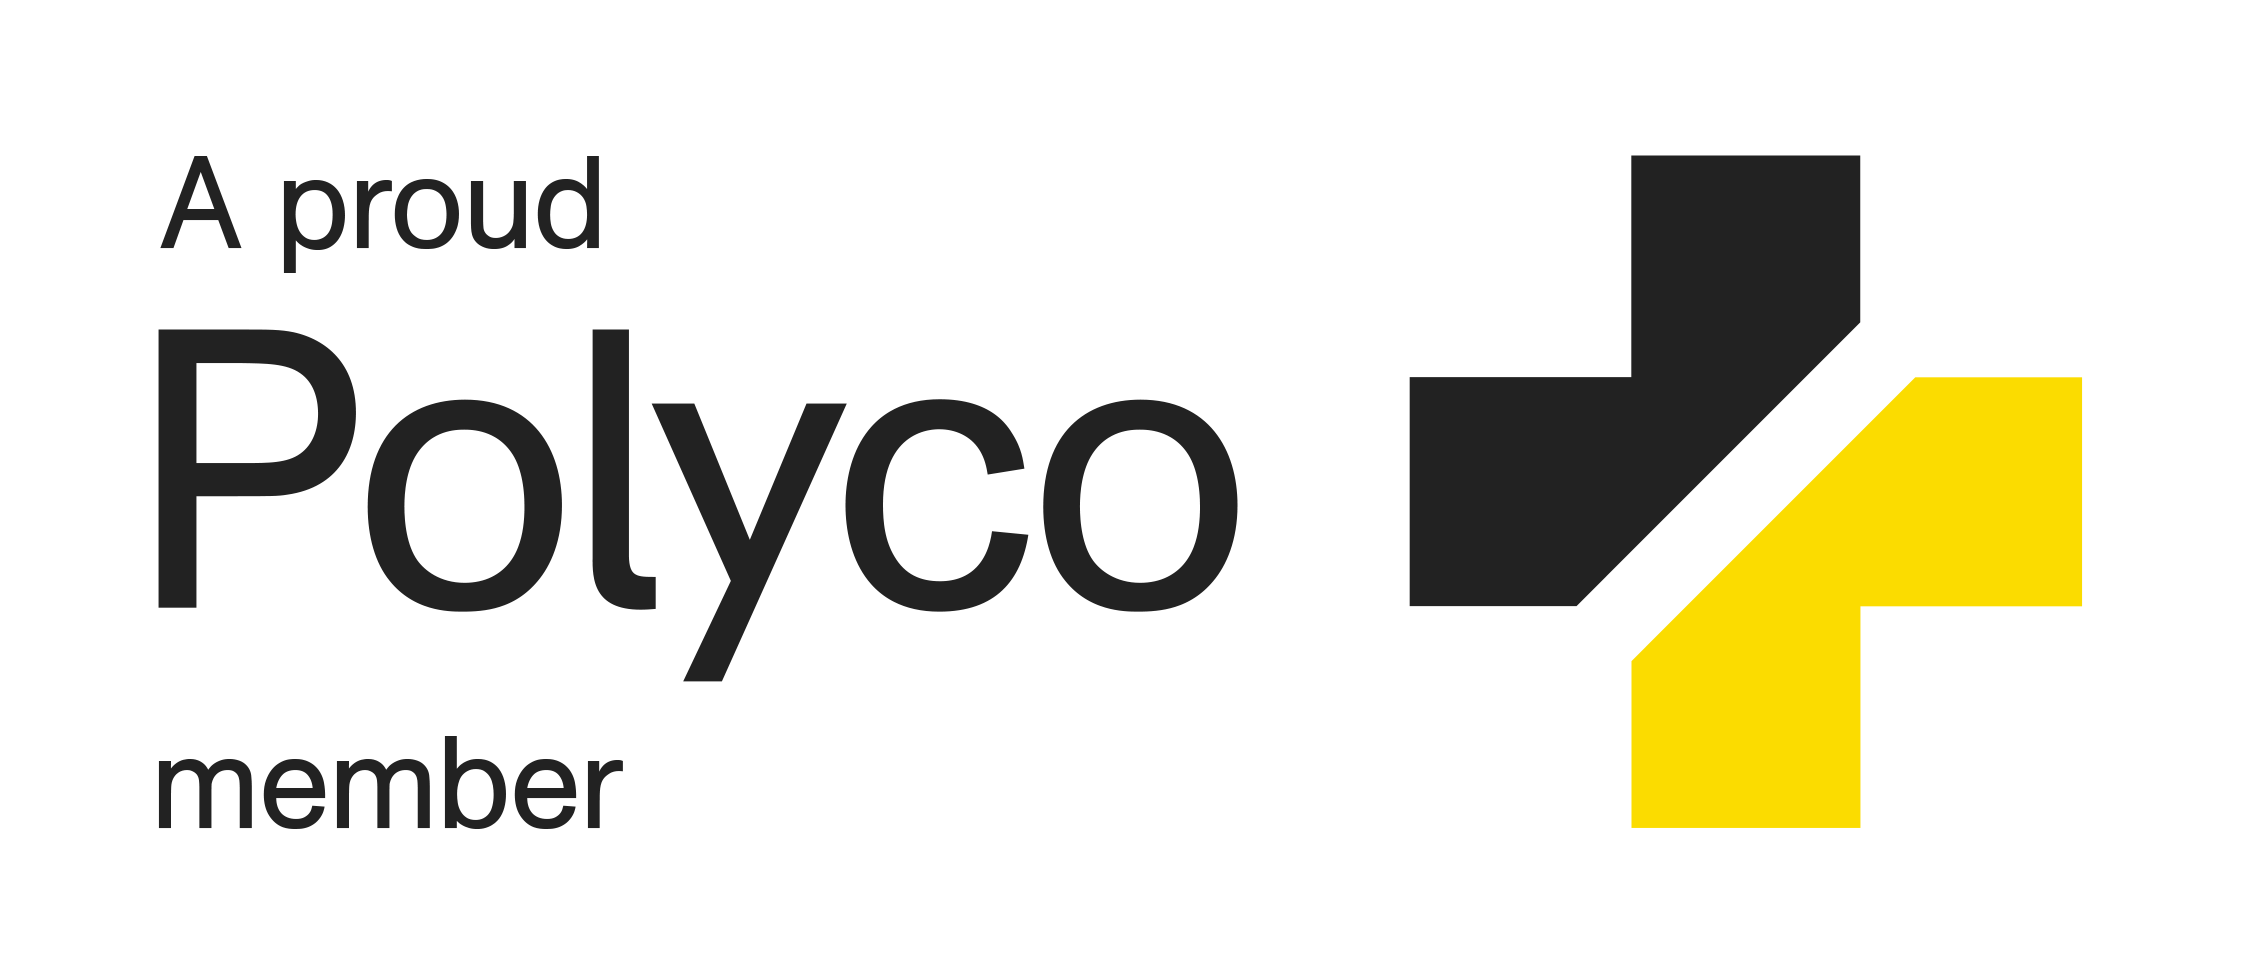 Polyco member